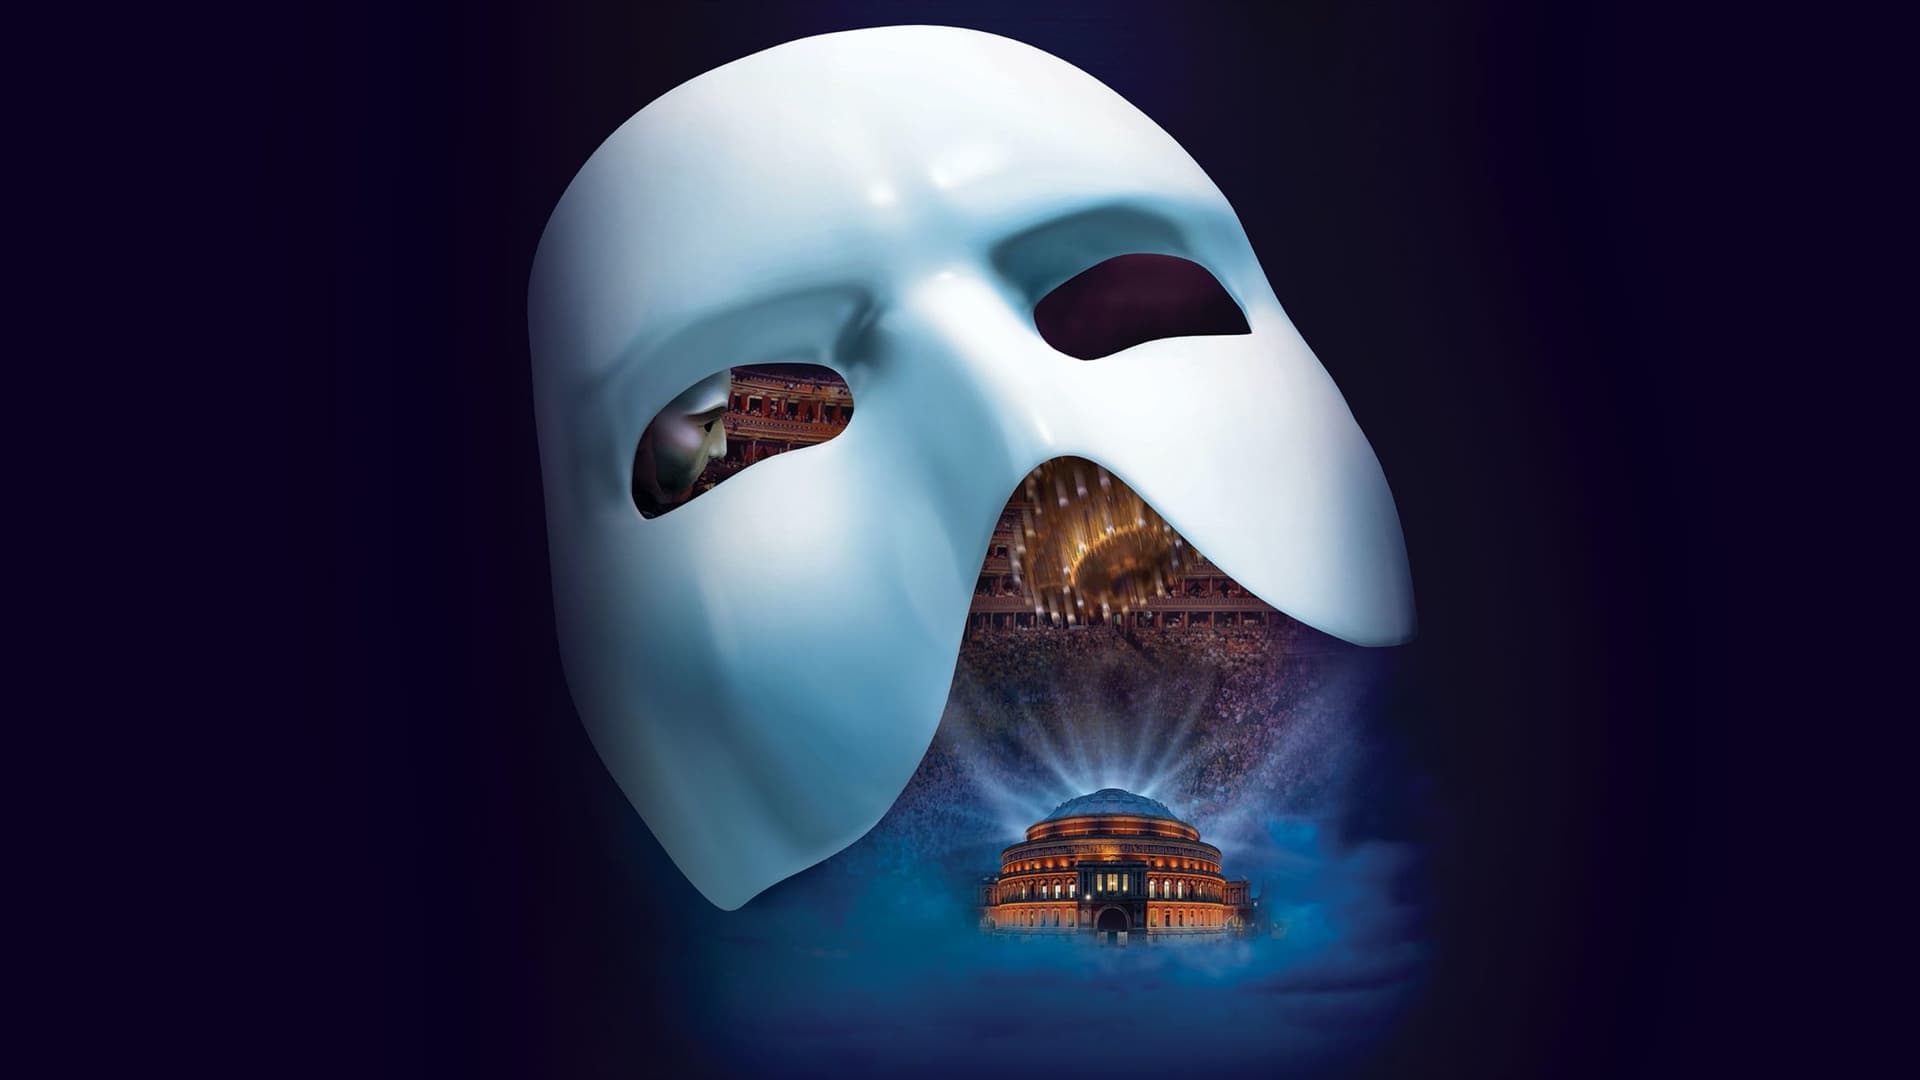 Das Phantom der Oper in der Royal Albert Hall